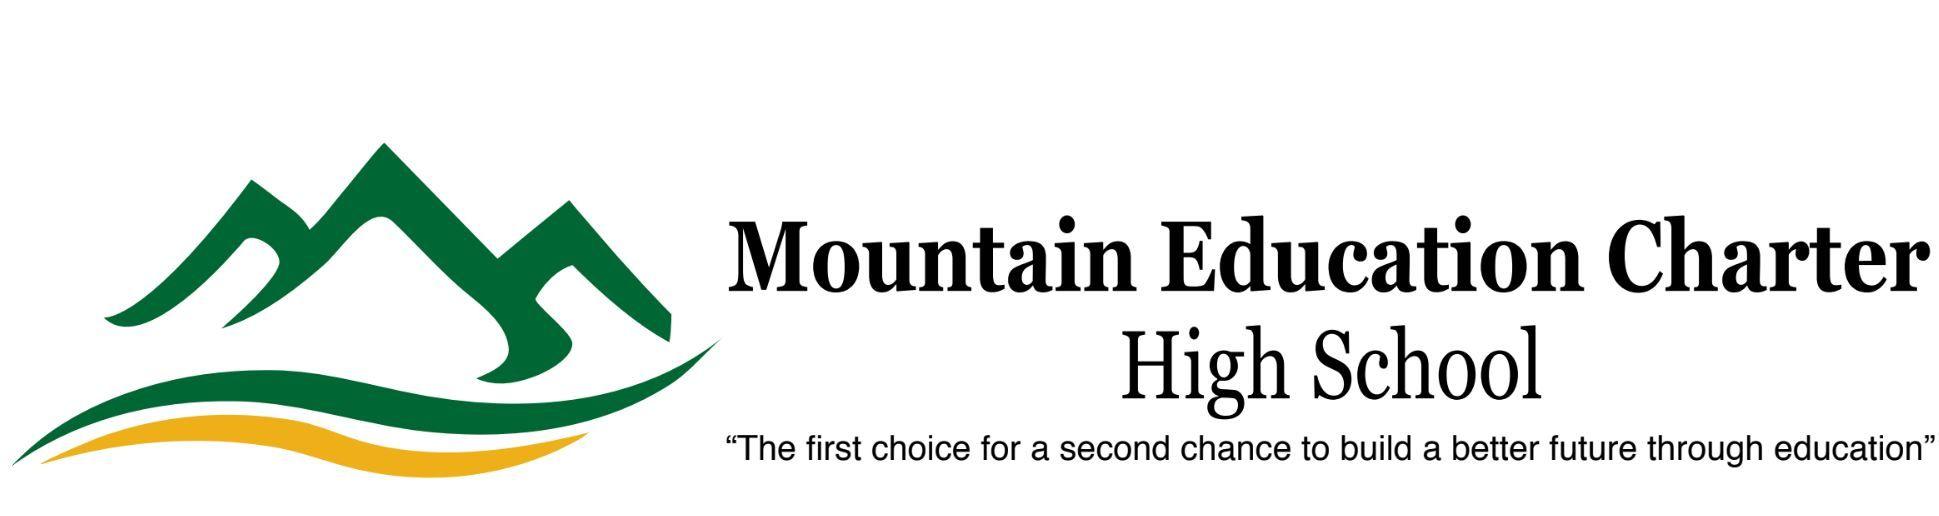 WBL Logo - WBL Student Resources - Mountain Education Charter High School